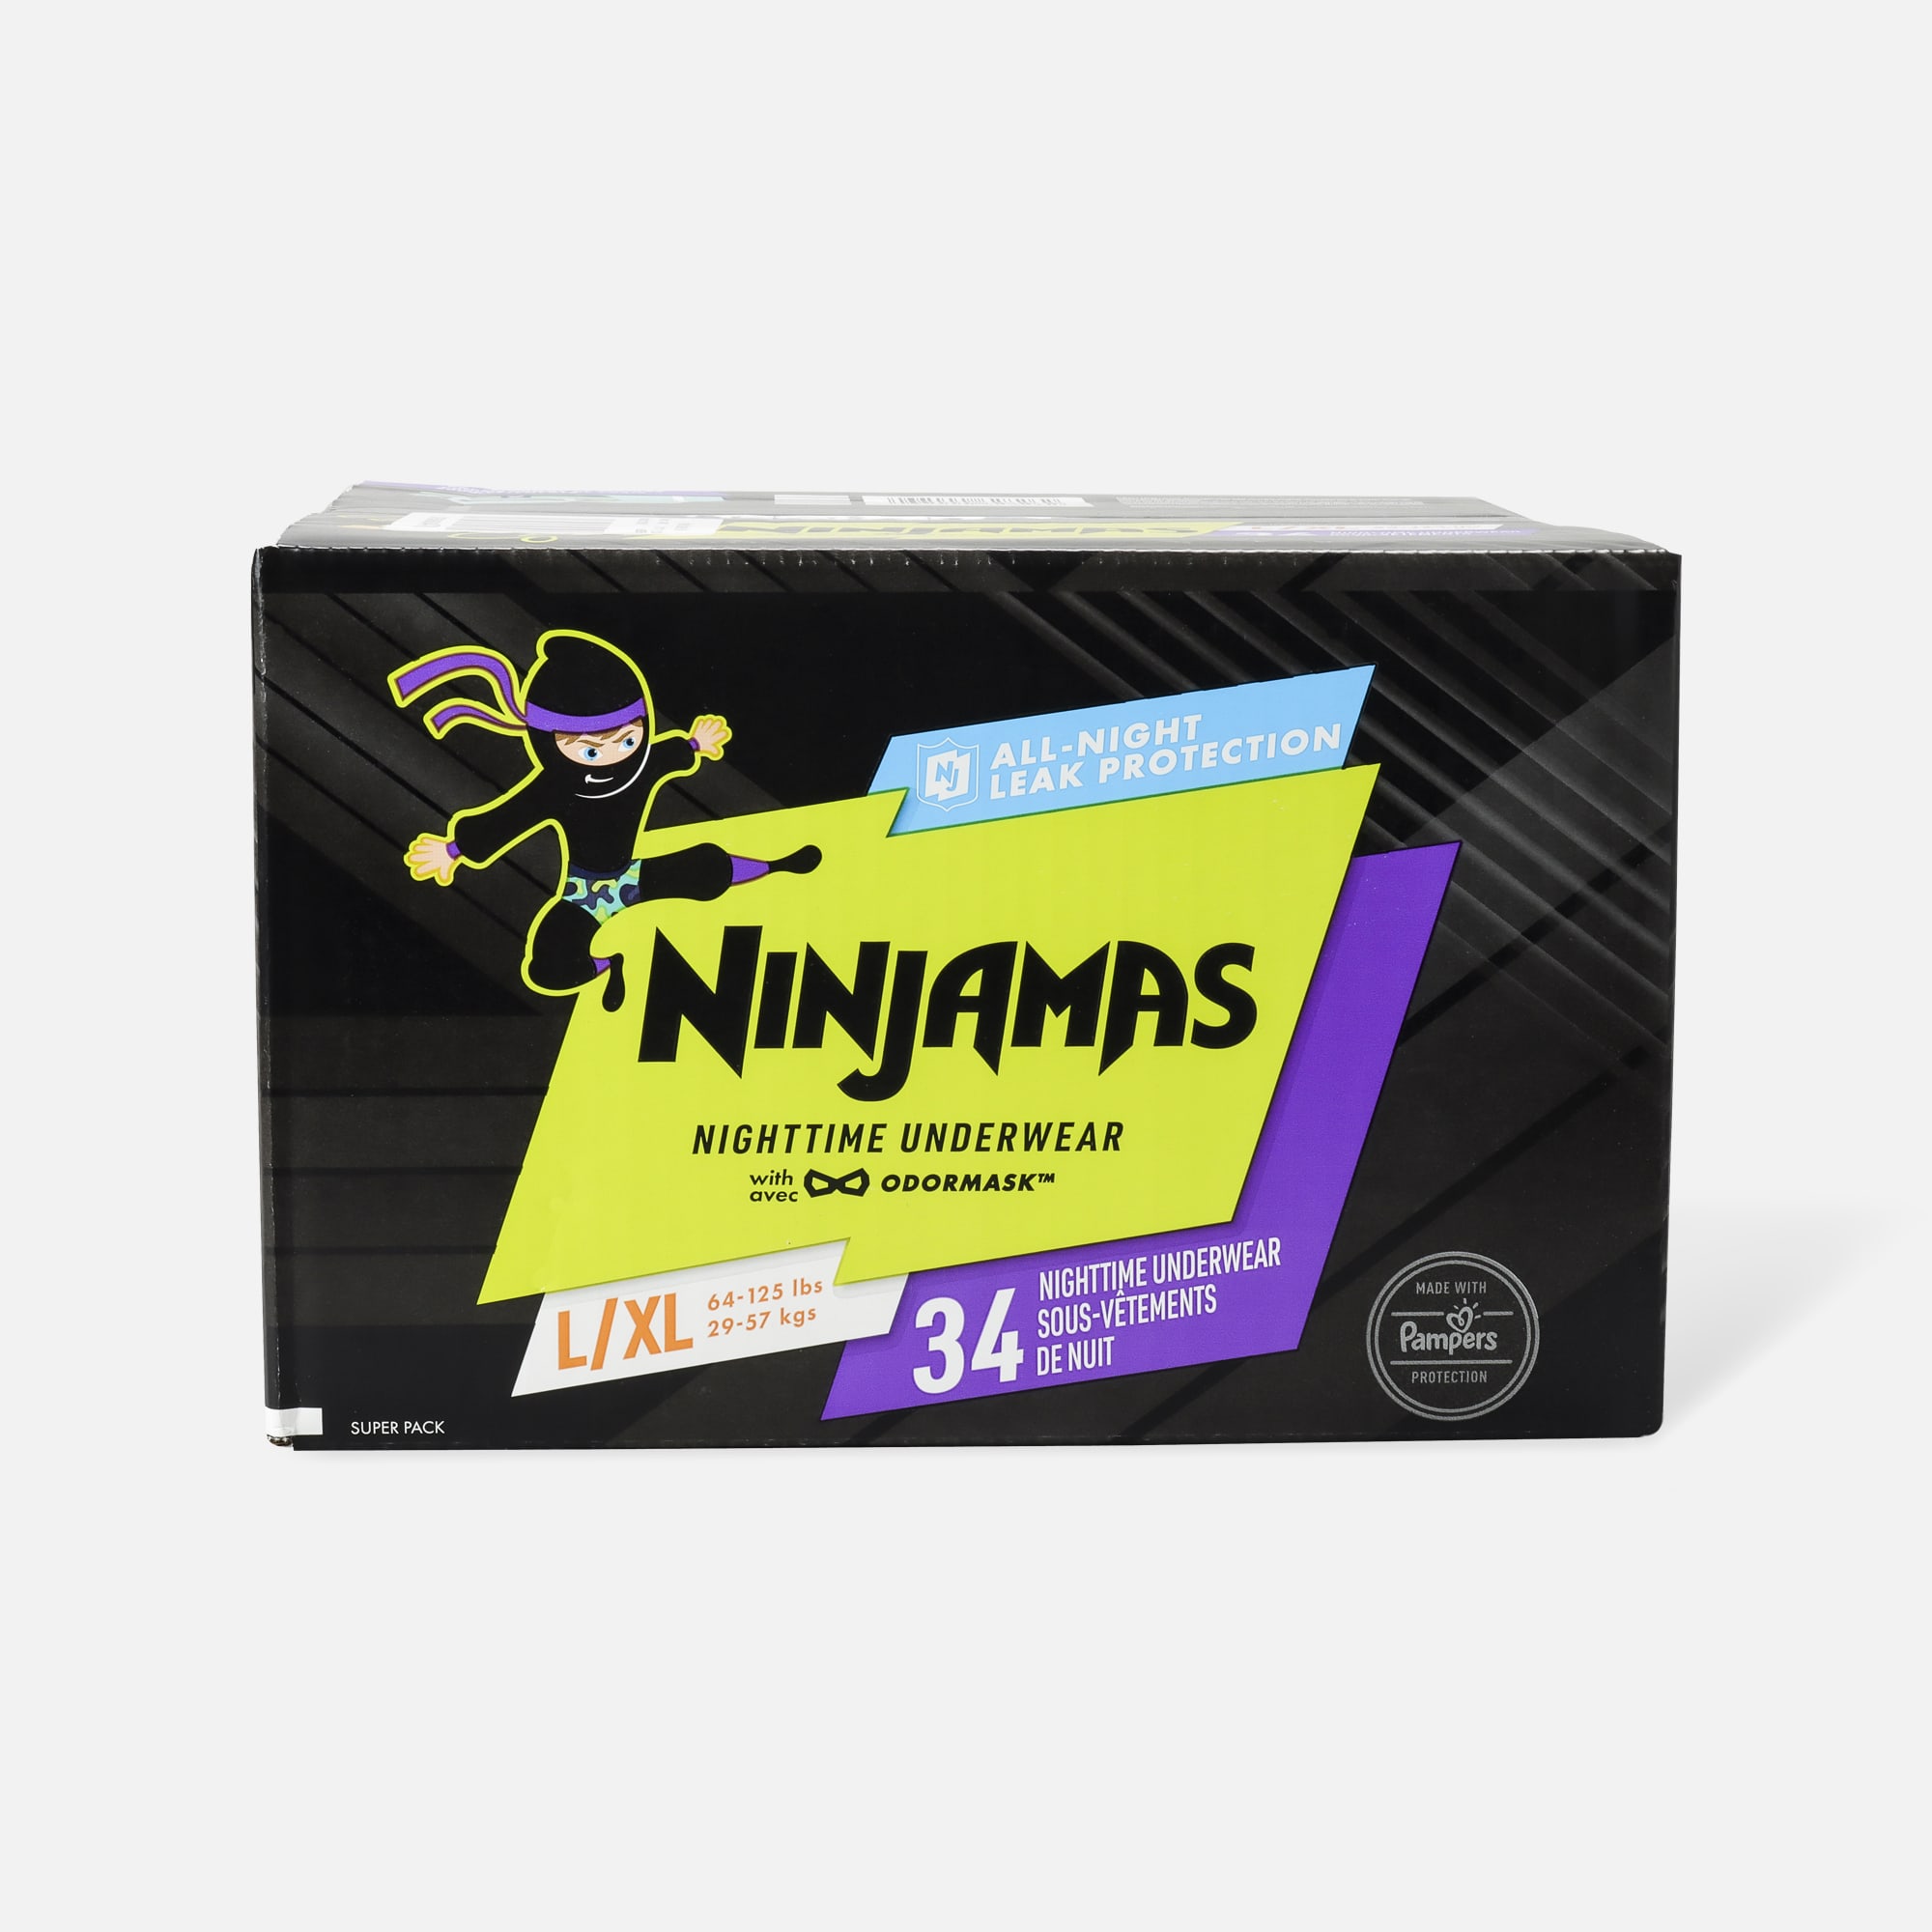 HSA Eligible  Ninjamas Nighttime Bedwetting Underwear Boy Size L